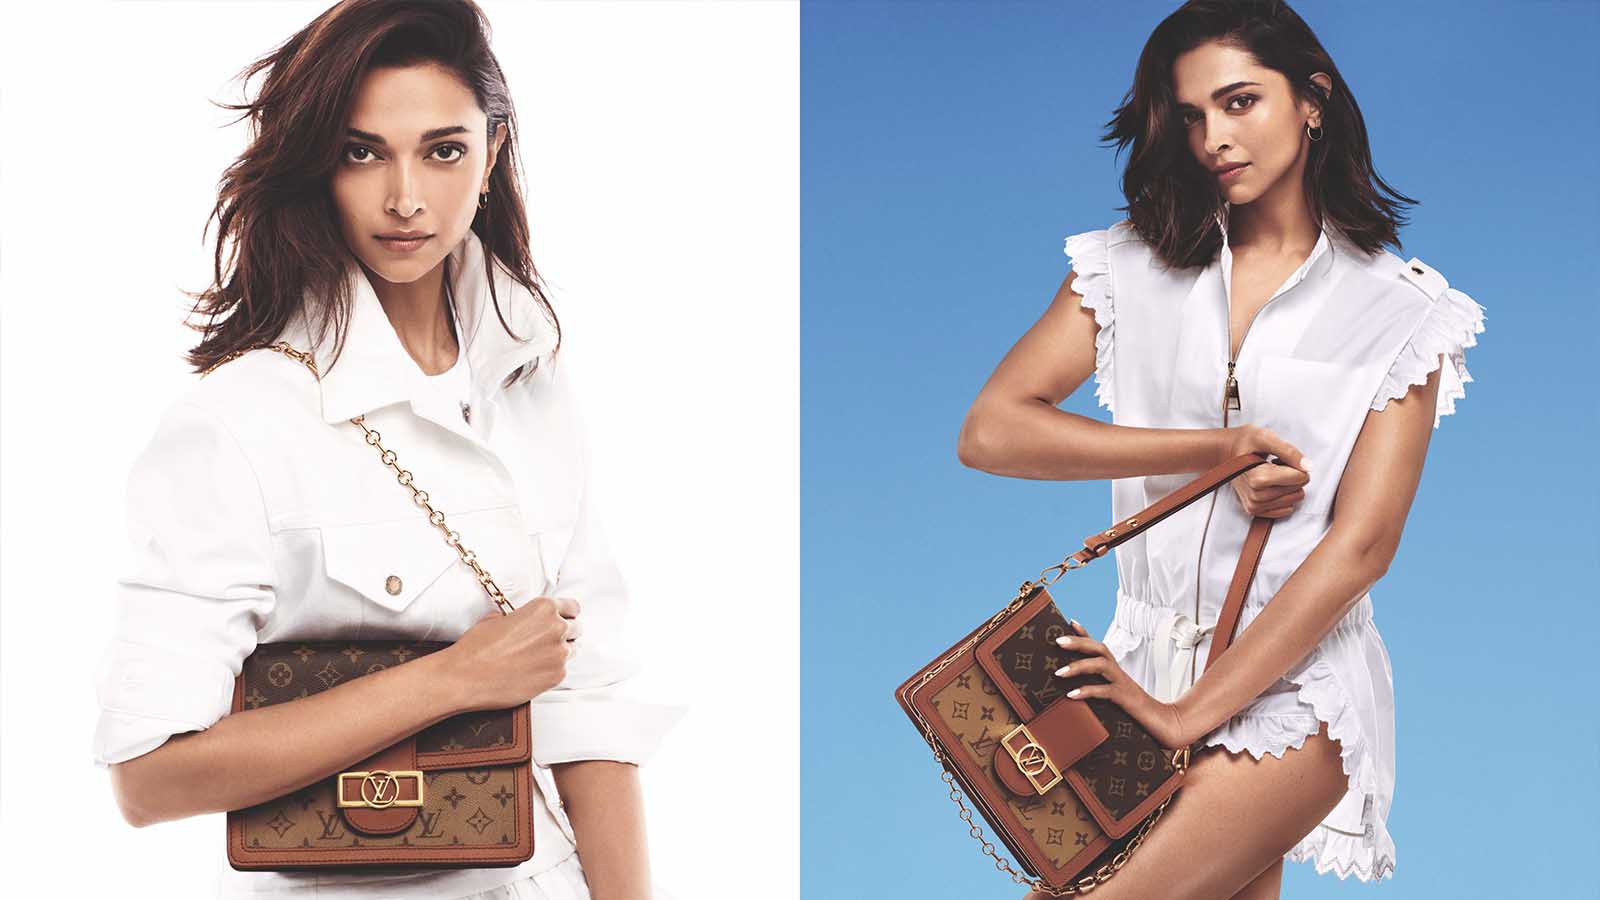 Deepika Padukone Arrives Dressed Head-To-Toe In Louis Vuitton For